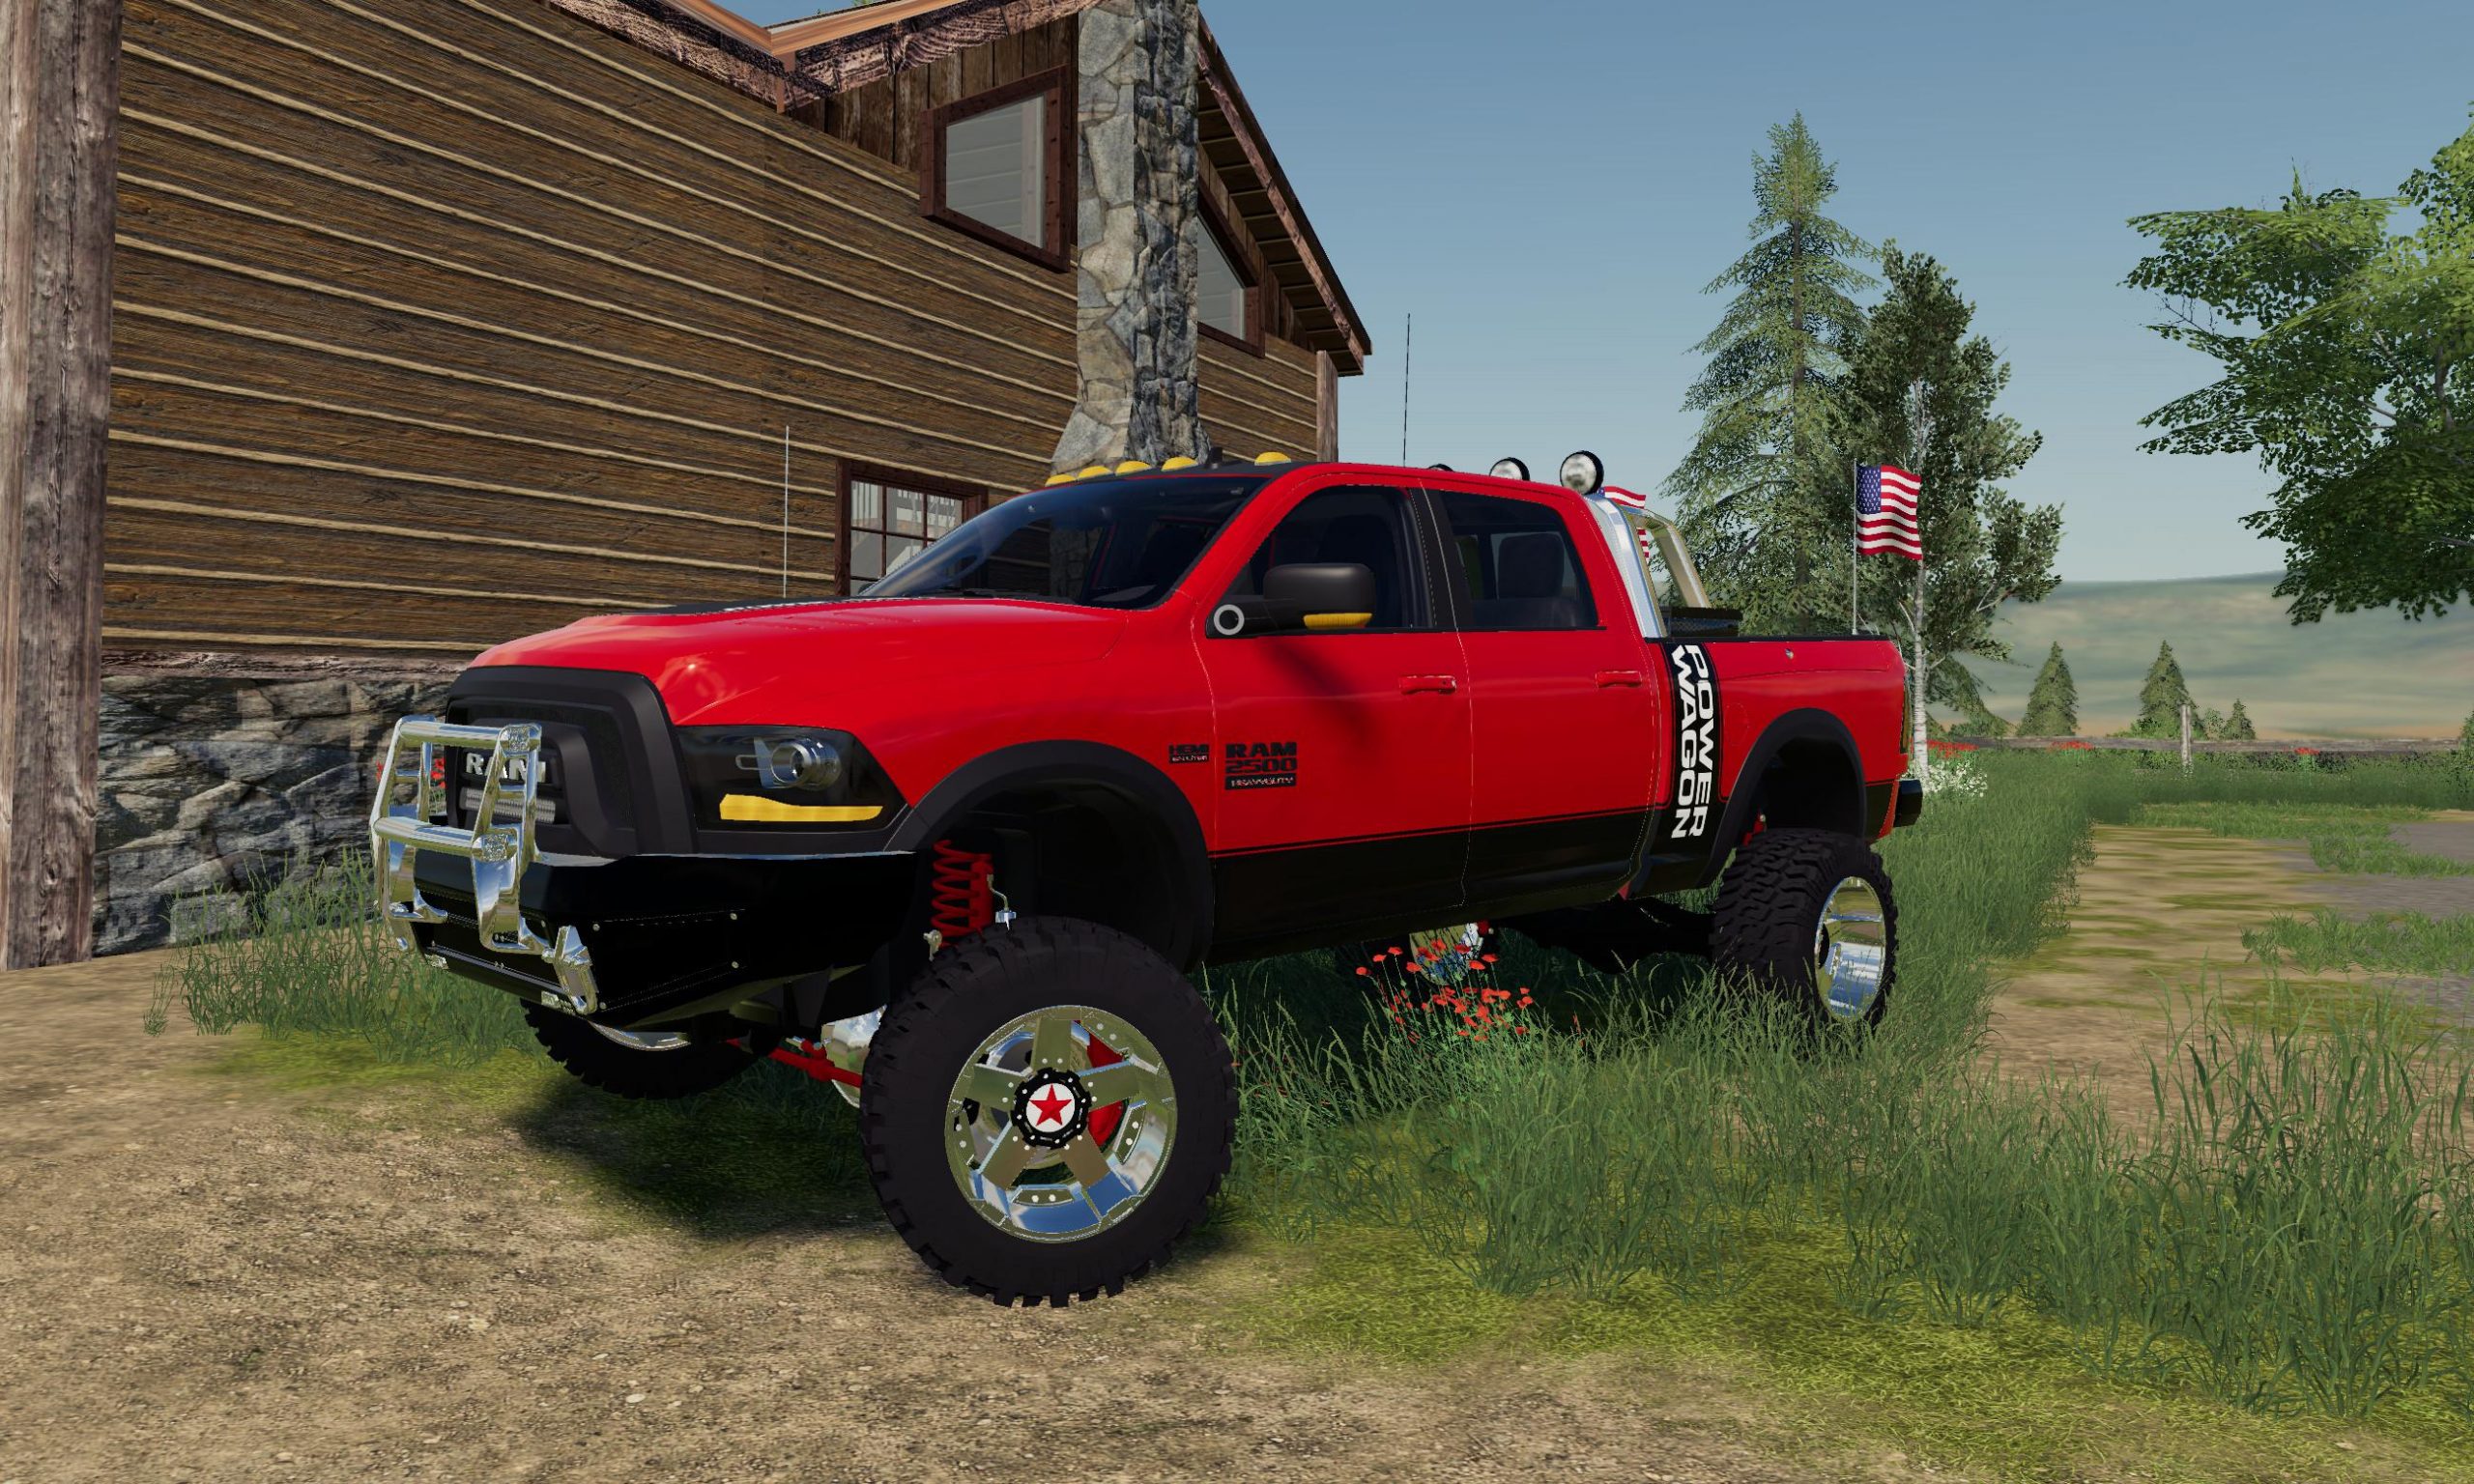 DODGE Power Wagon v1.0 Truck - Farming Simulator 19 mod, LS19 Mod download!